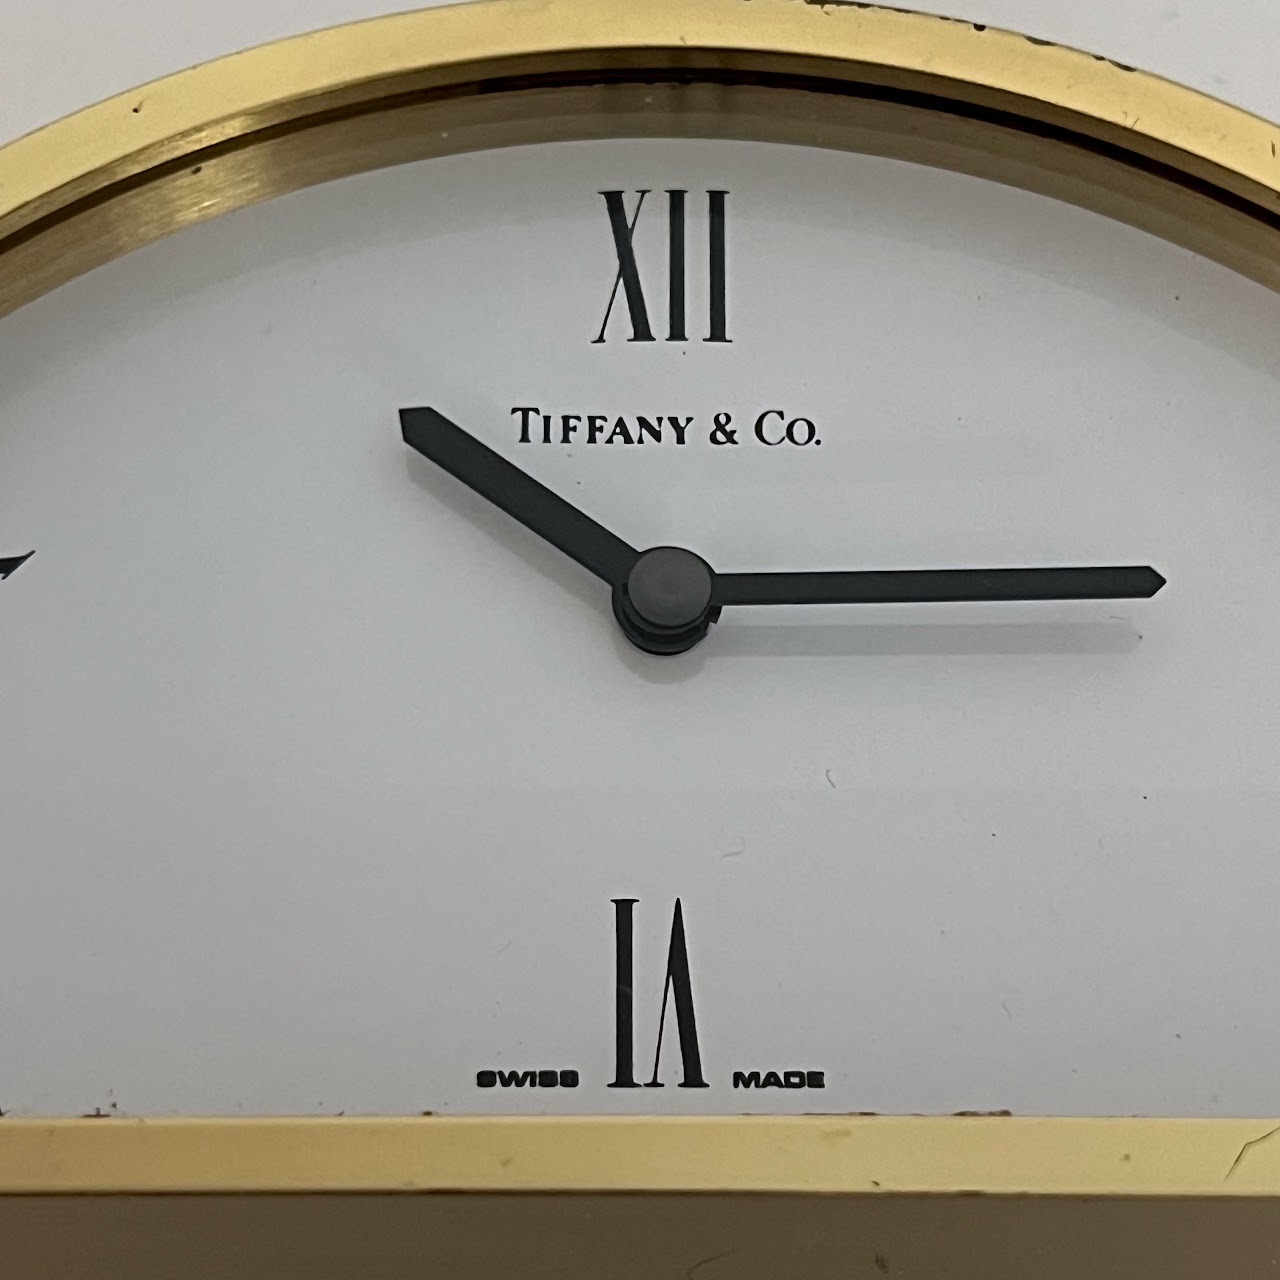 Tiffany & Co. Brass Half Moon Mantel Clock